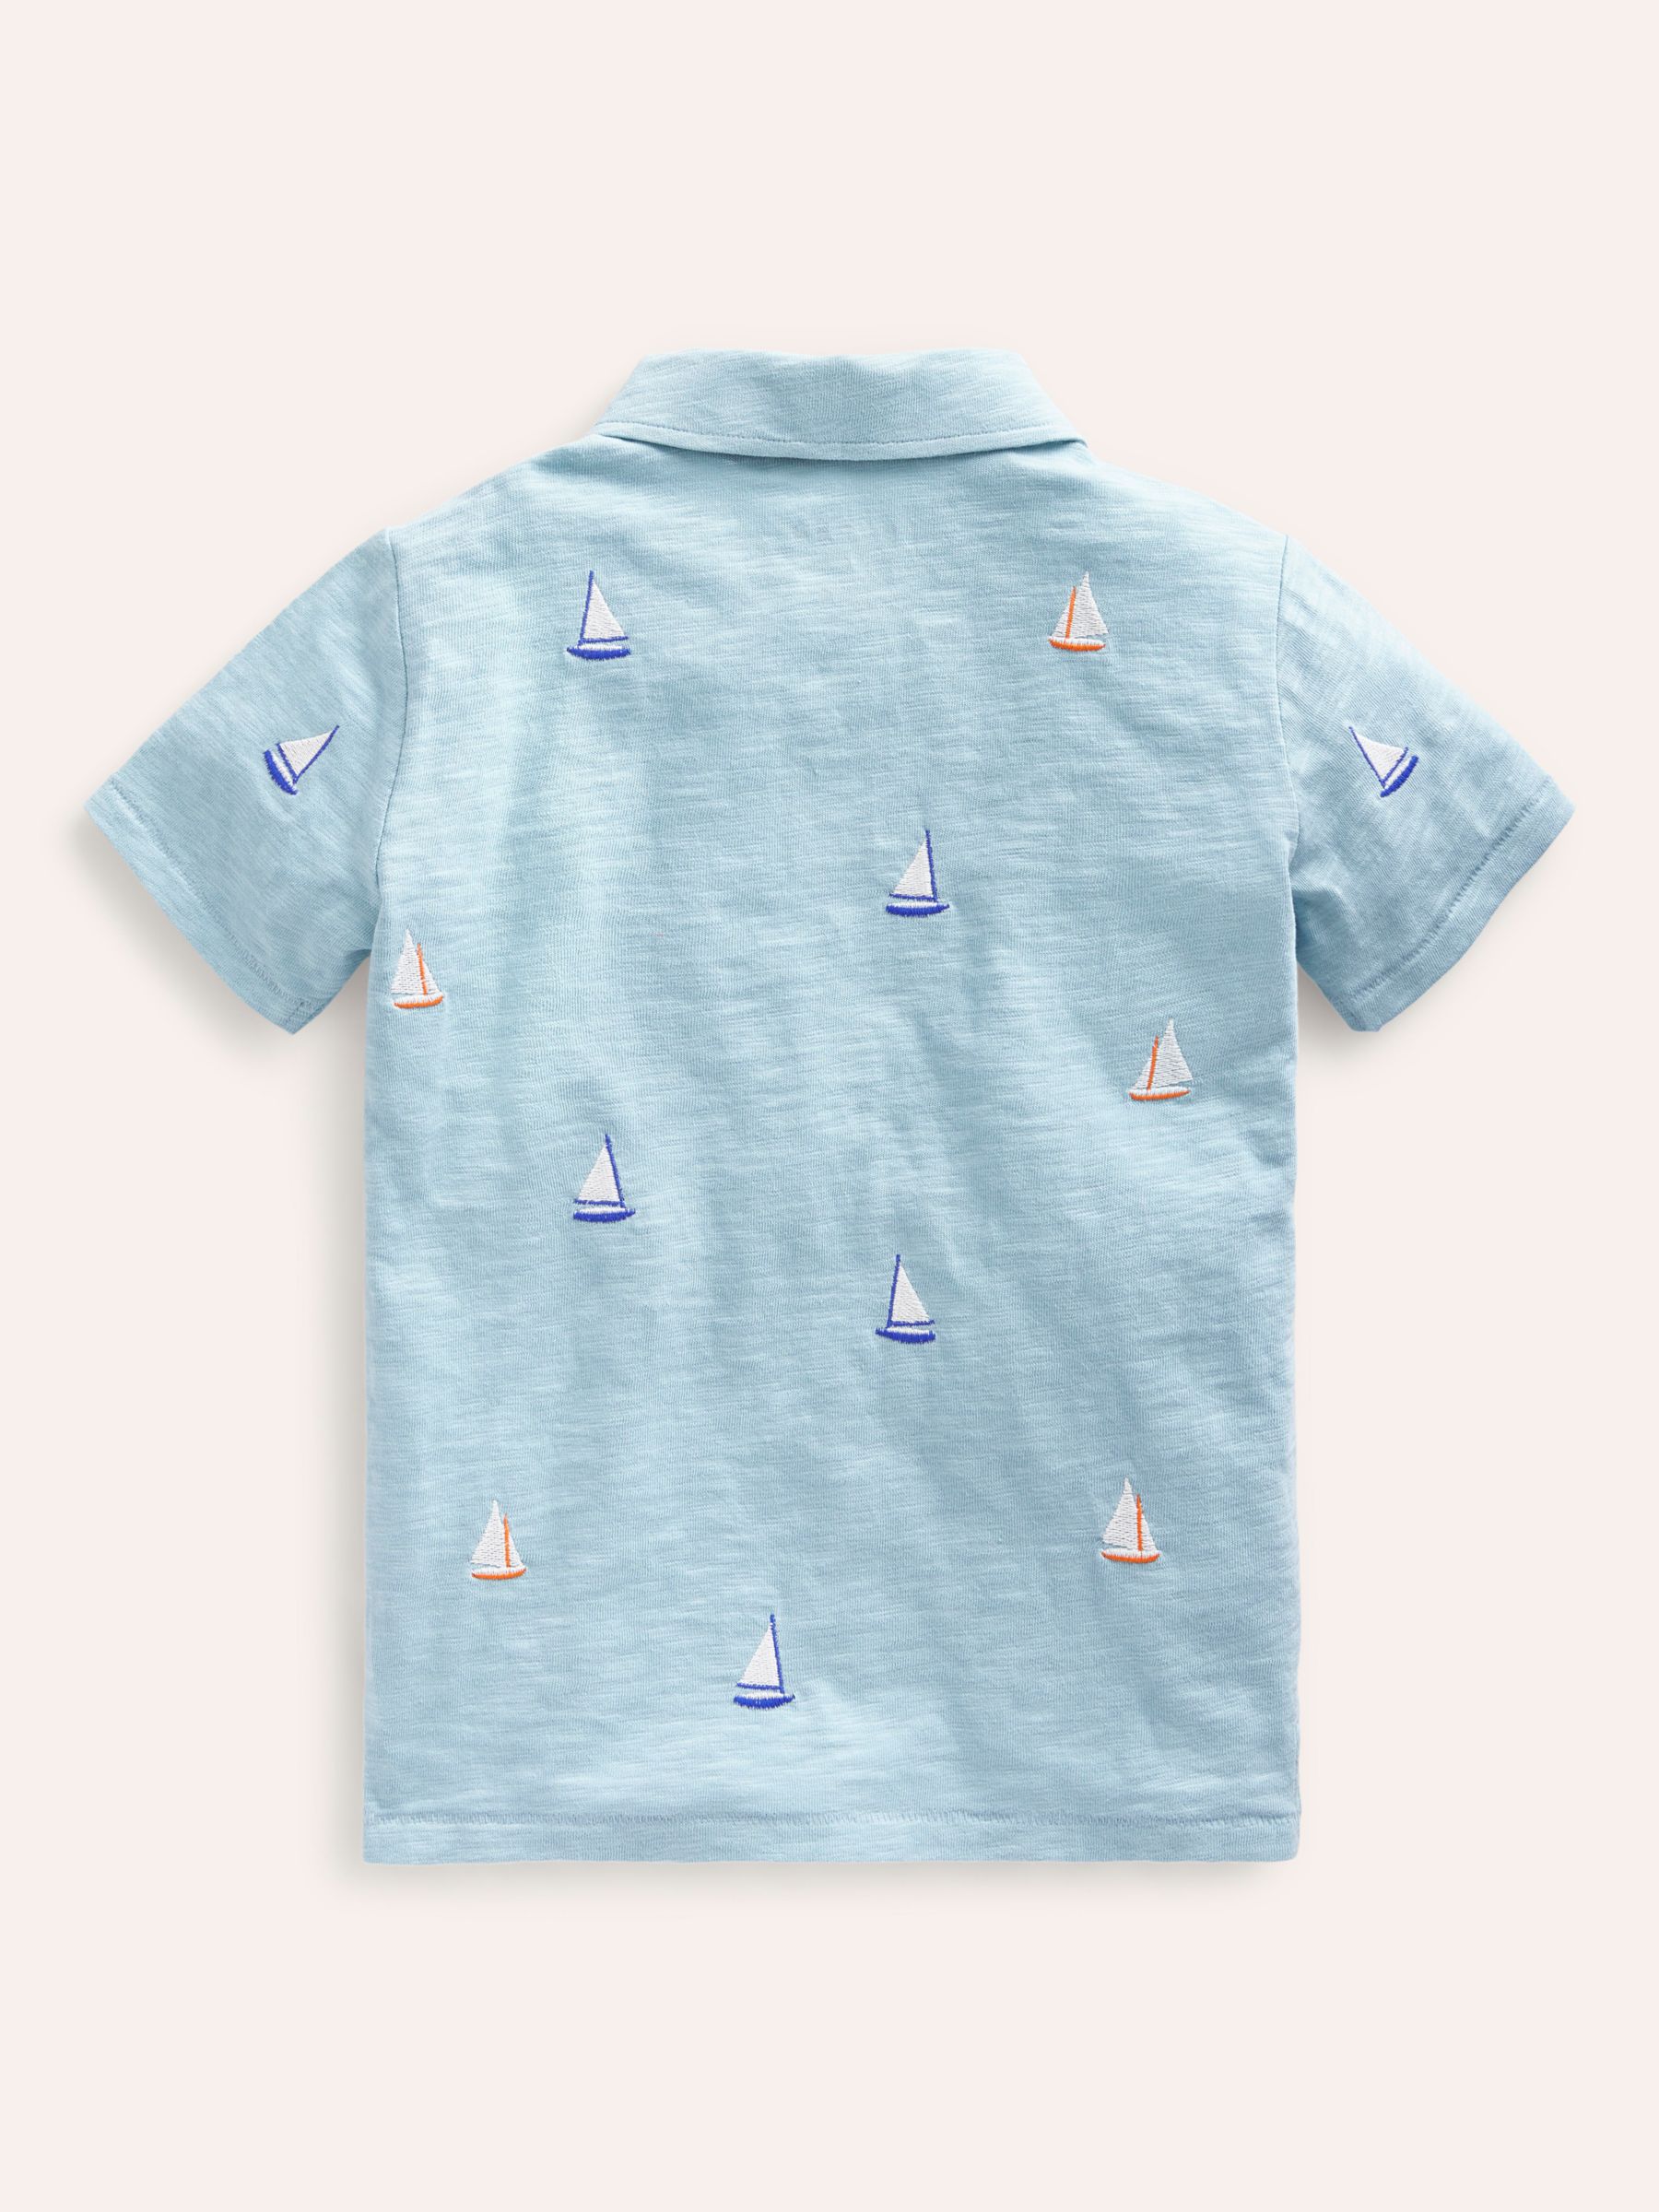 Mini Boden Kids' Sail Boat Embroidered Slub Polo Shirt, Blue/Multi, 12-18 months